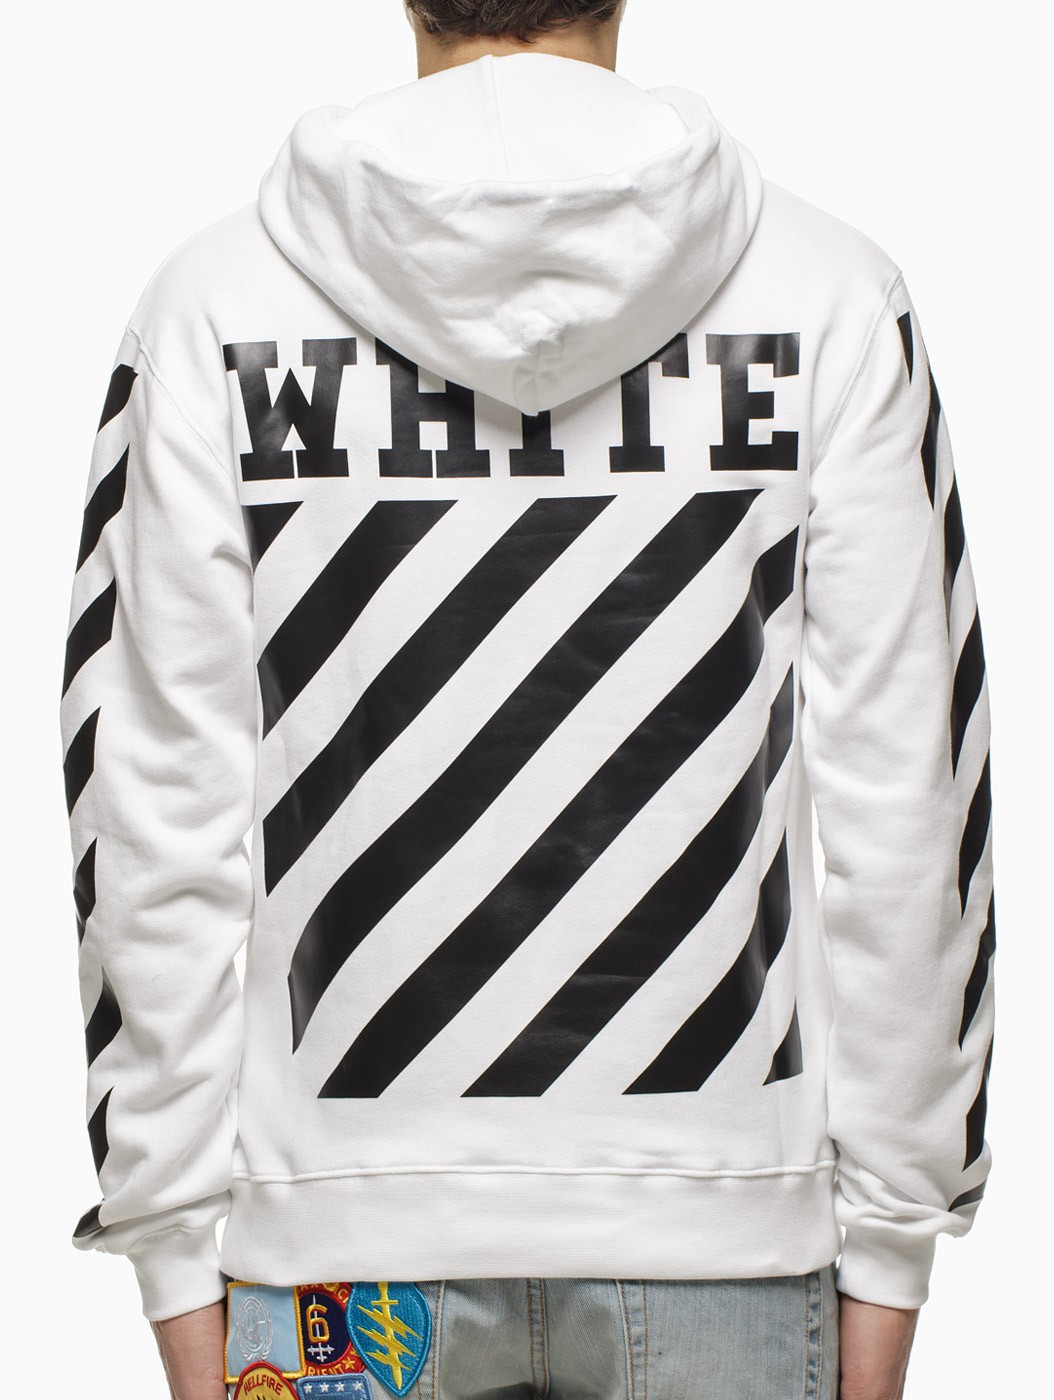 Lyst - Off-White C/O Virgil Abloh “Caravaggio” Sweatshirt in White for Men